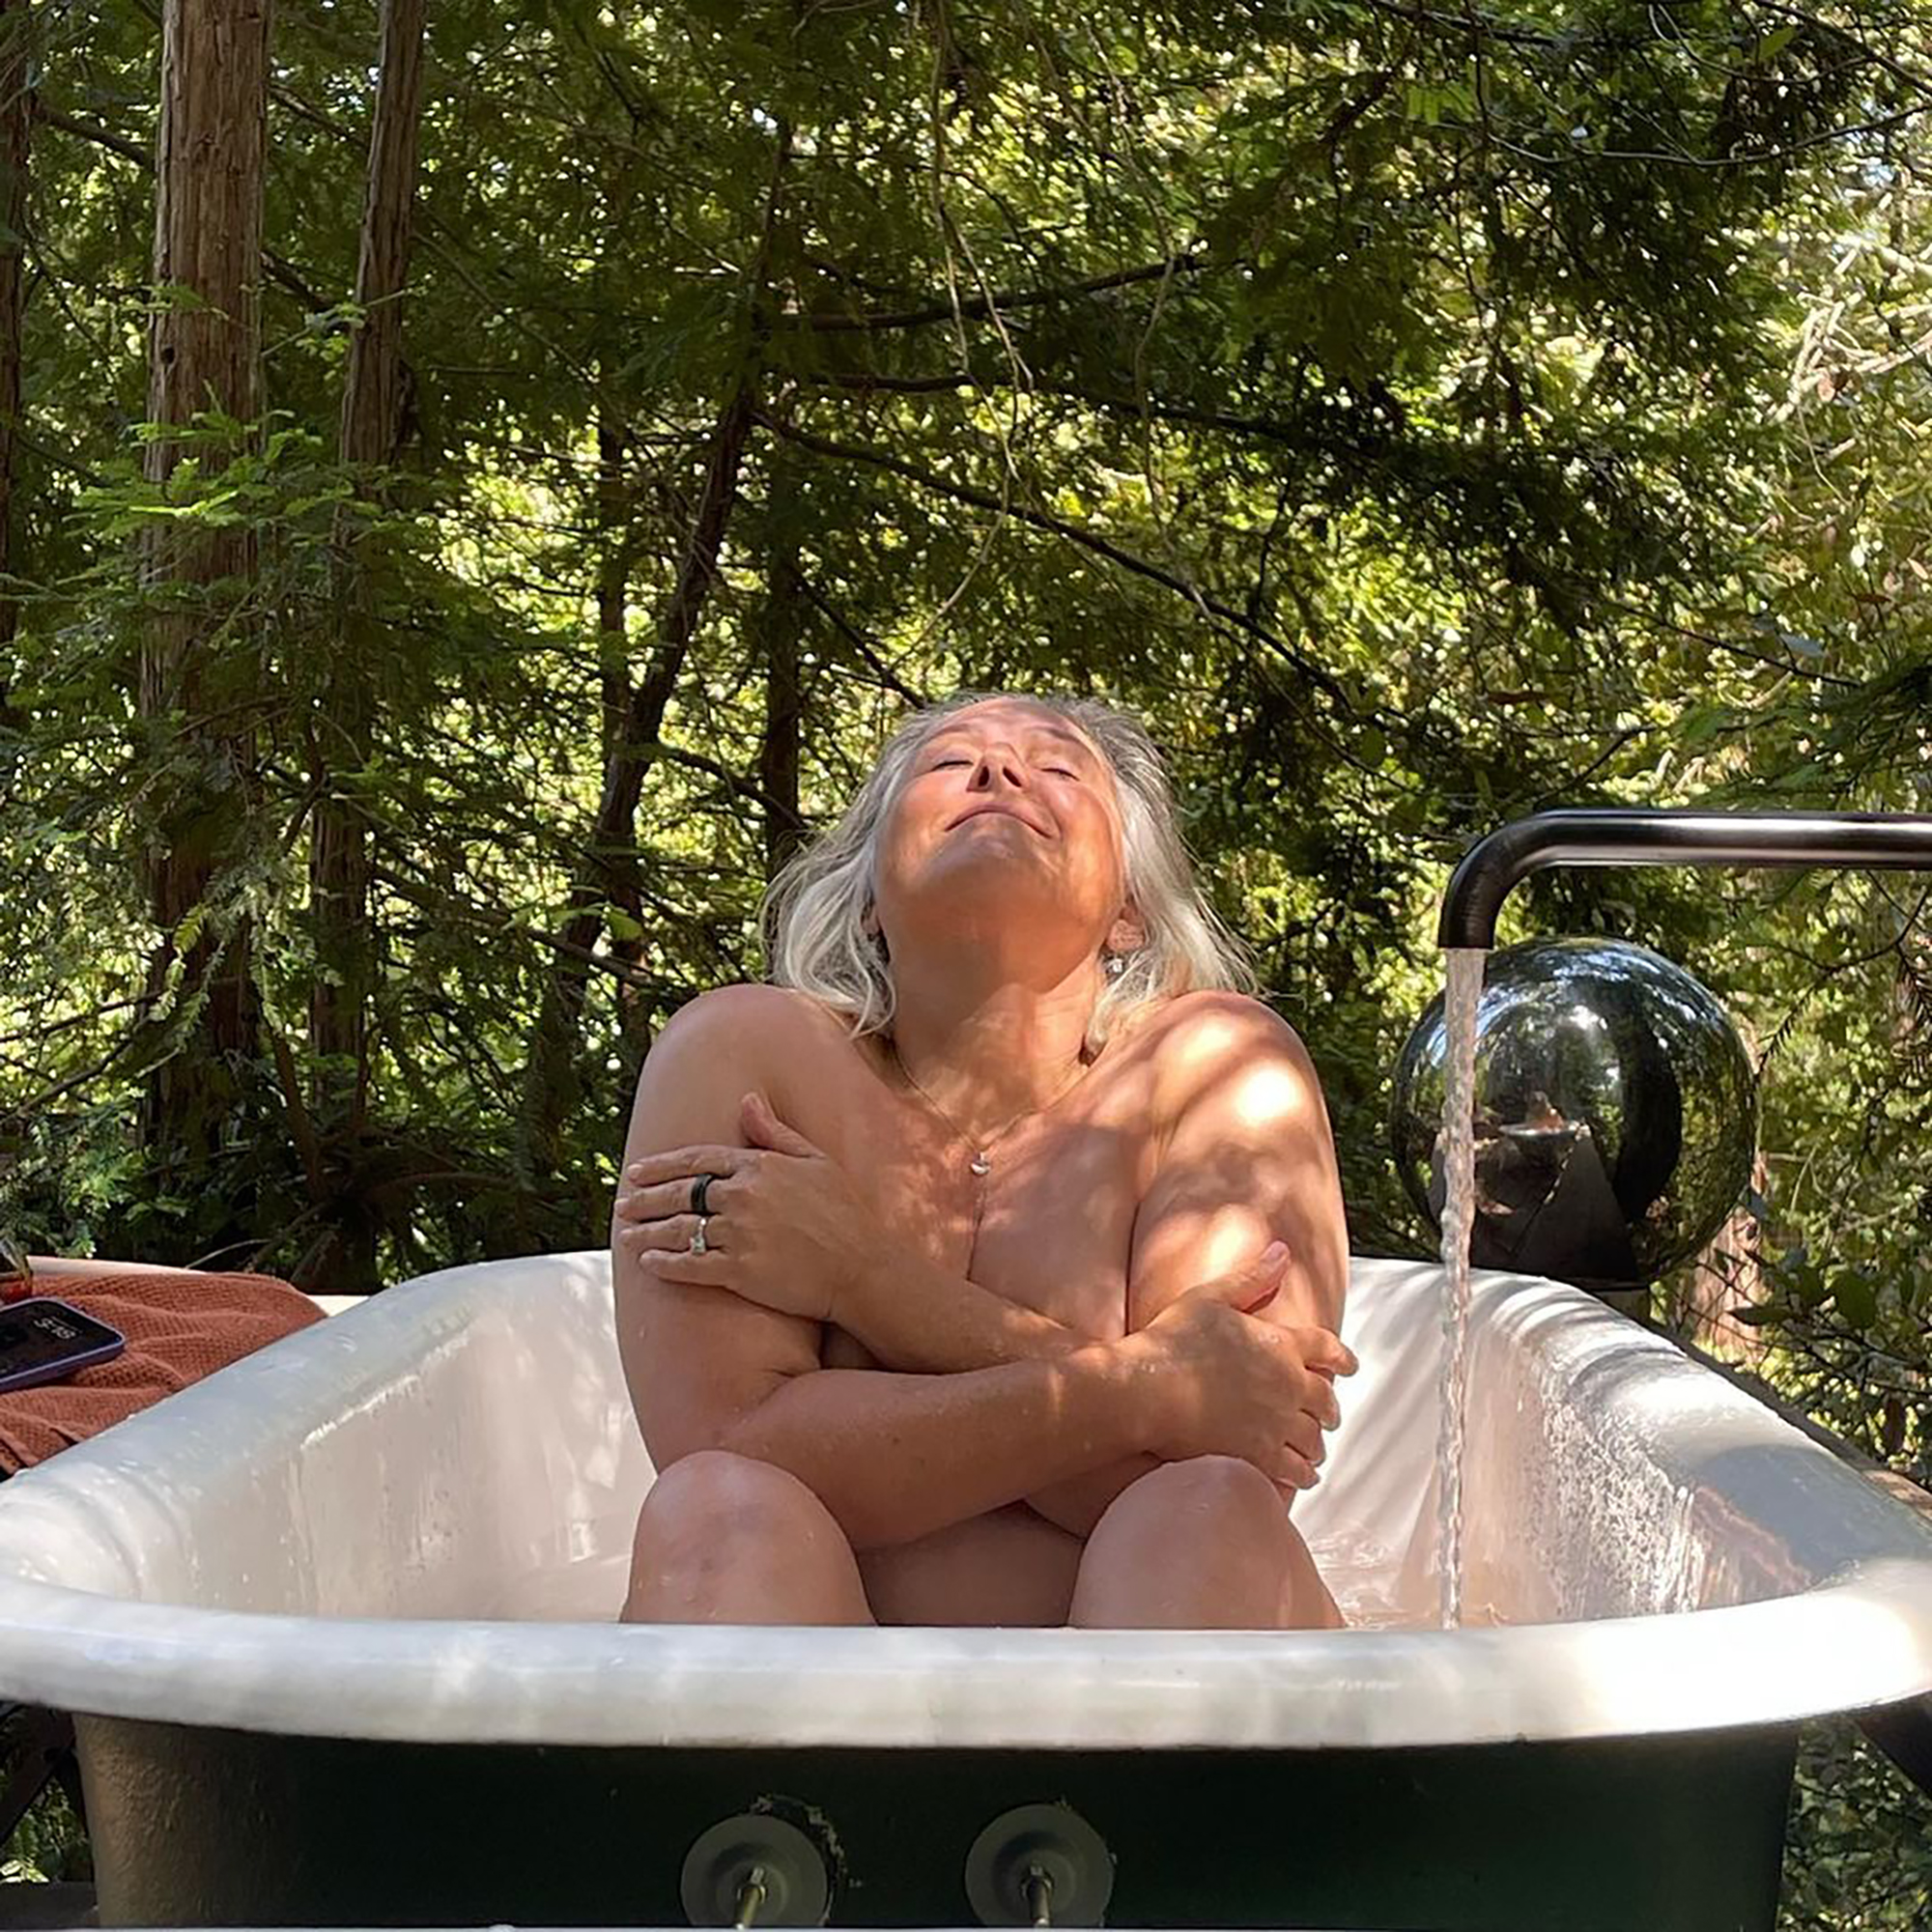 arjun sridharan recommends nude in bath tub pic